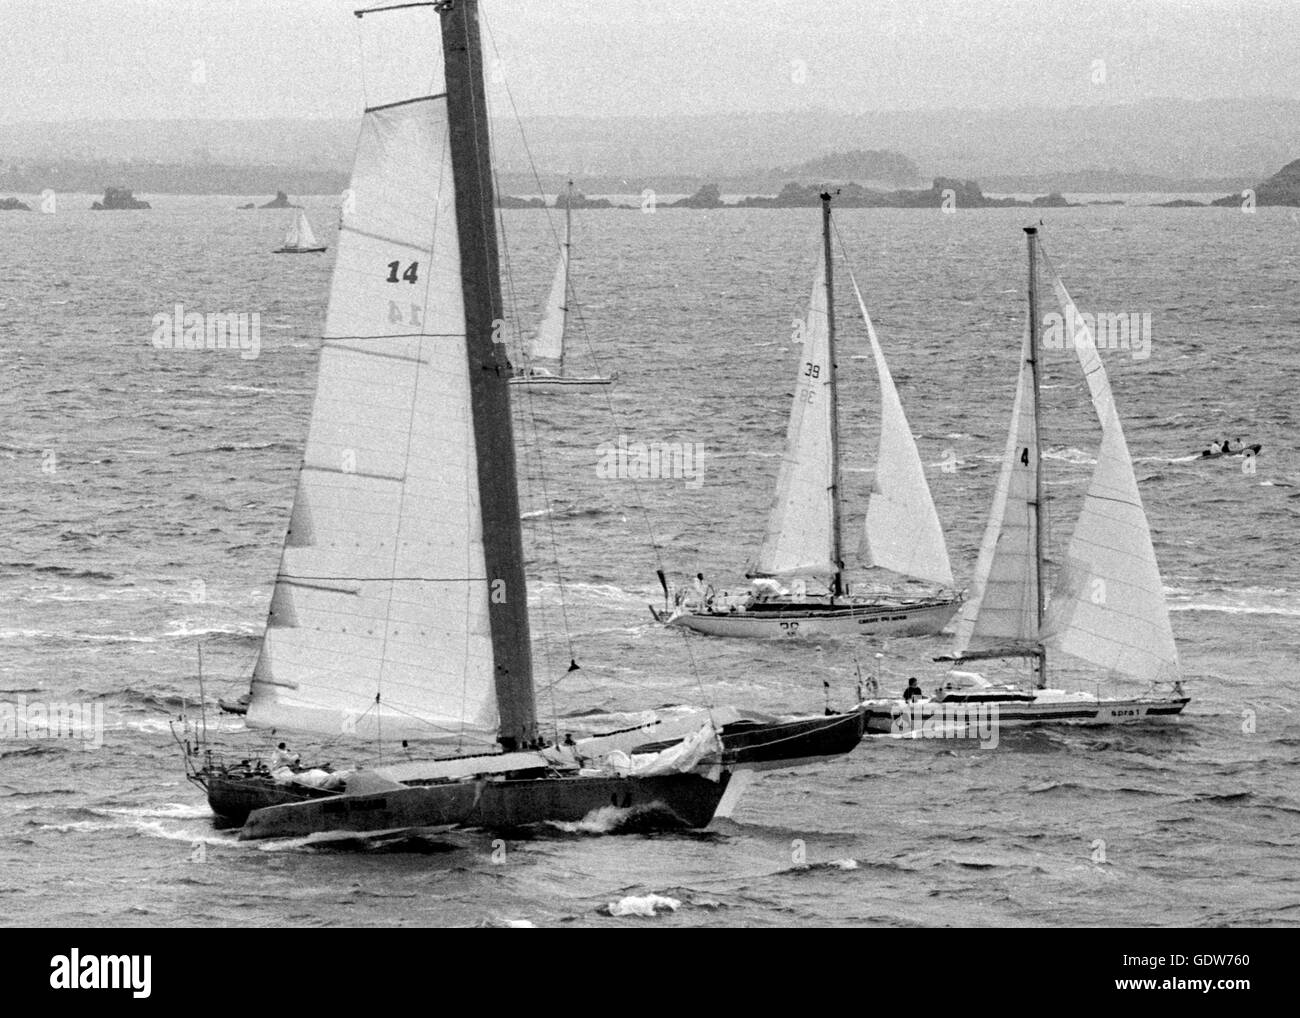 AJAX NEWS PHOTOS. 7TH NOVEMBER, 1982. ST.MALO, FRANCE. - ROUTE DU RHUM RACE -  PAUL RICARD, CREDIT DU NORD, SPRA 1 AT START. PHOTO:JONATHAN EASTLAND/AJAX REF:820711 821007 3 Stock Photo